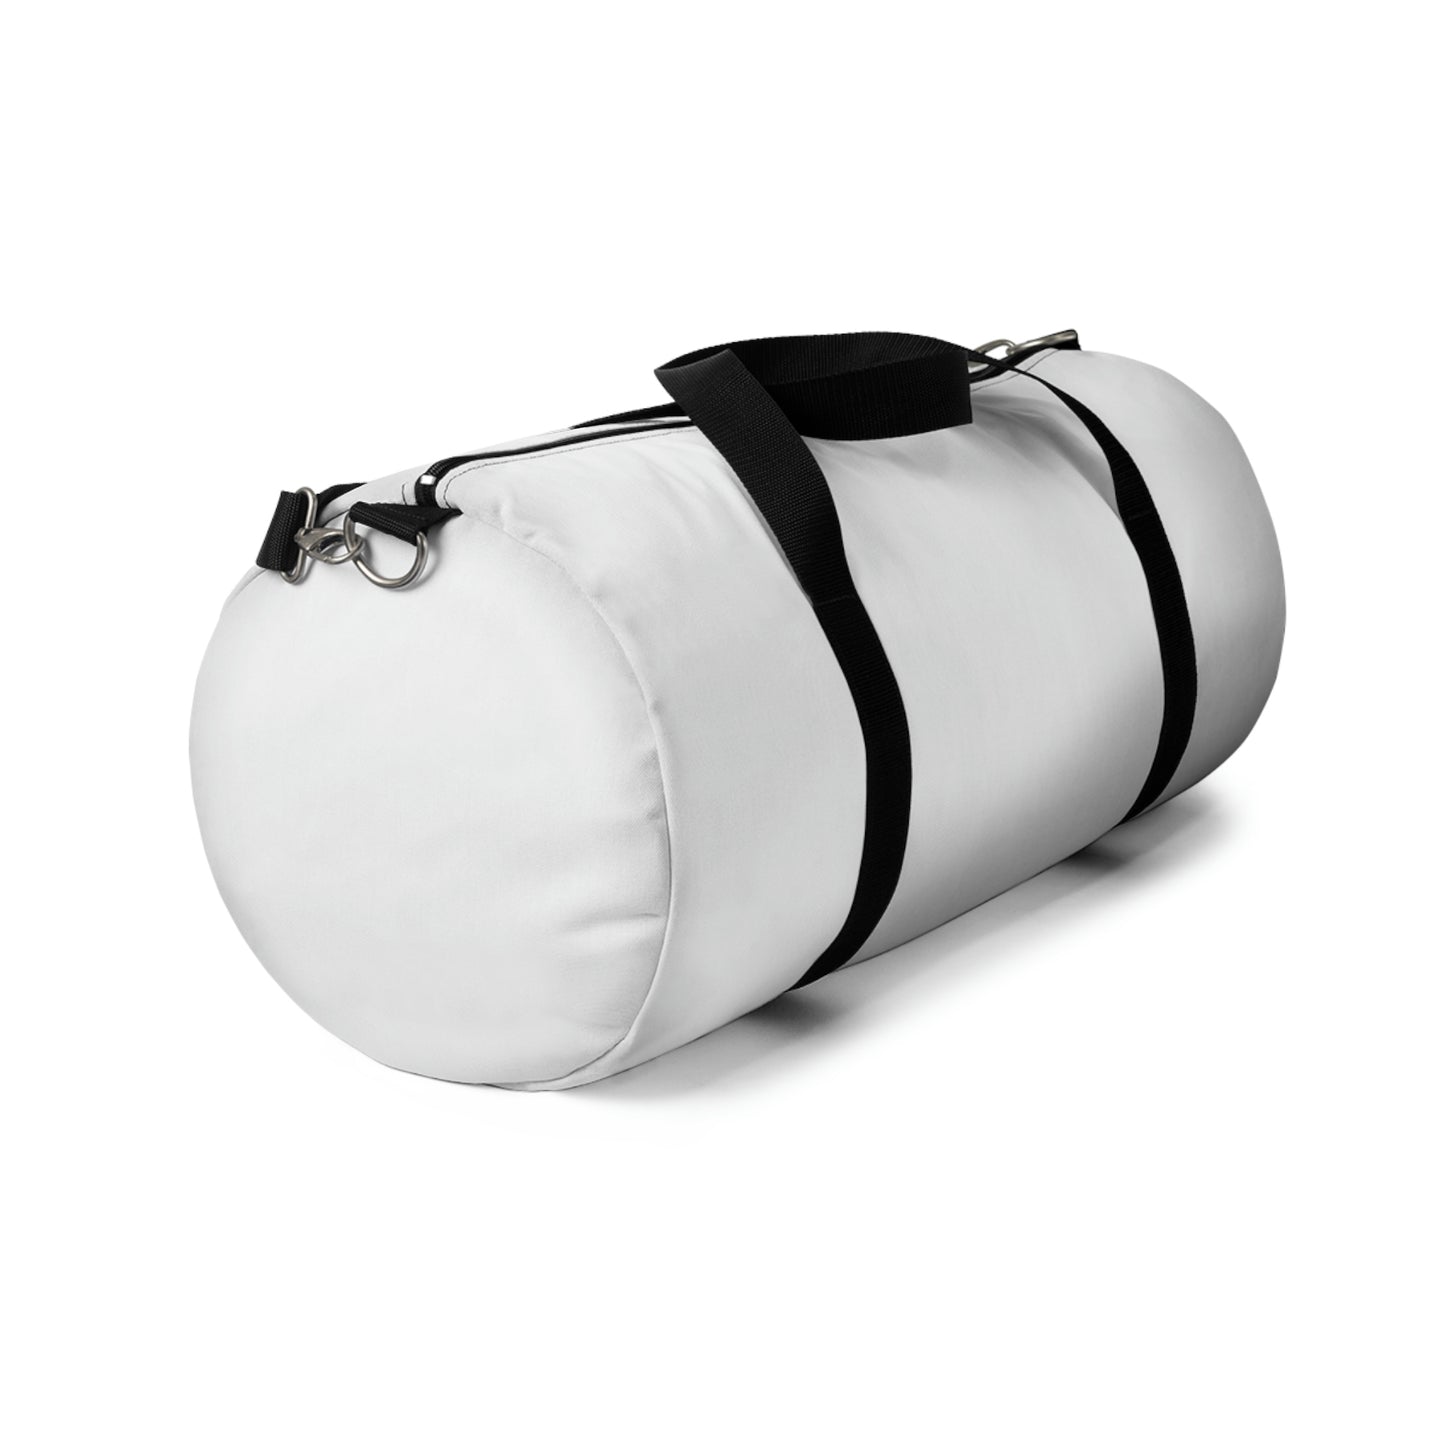 Unisex Sports Duffel Bag